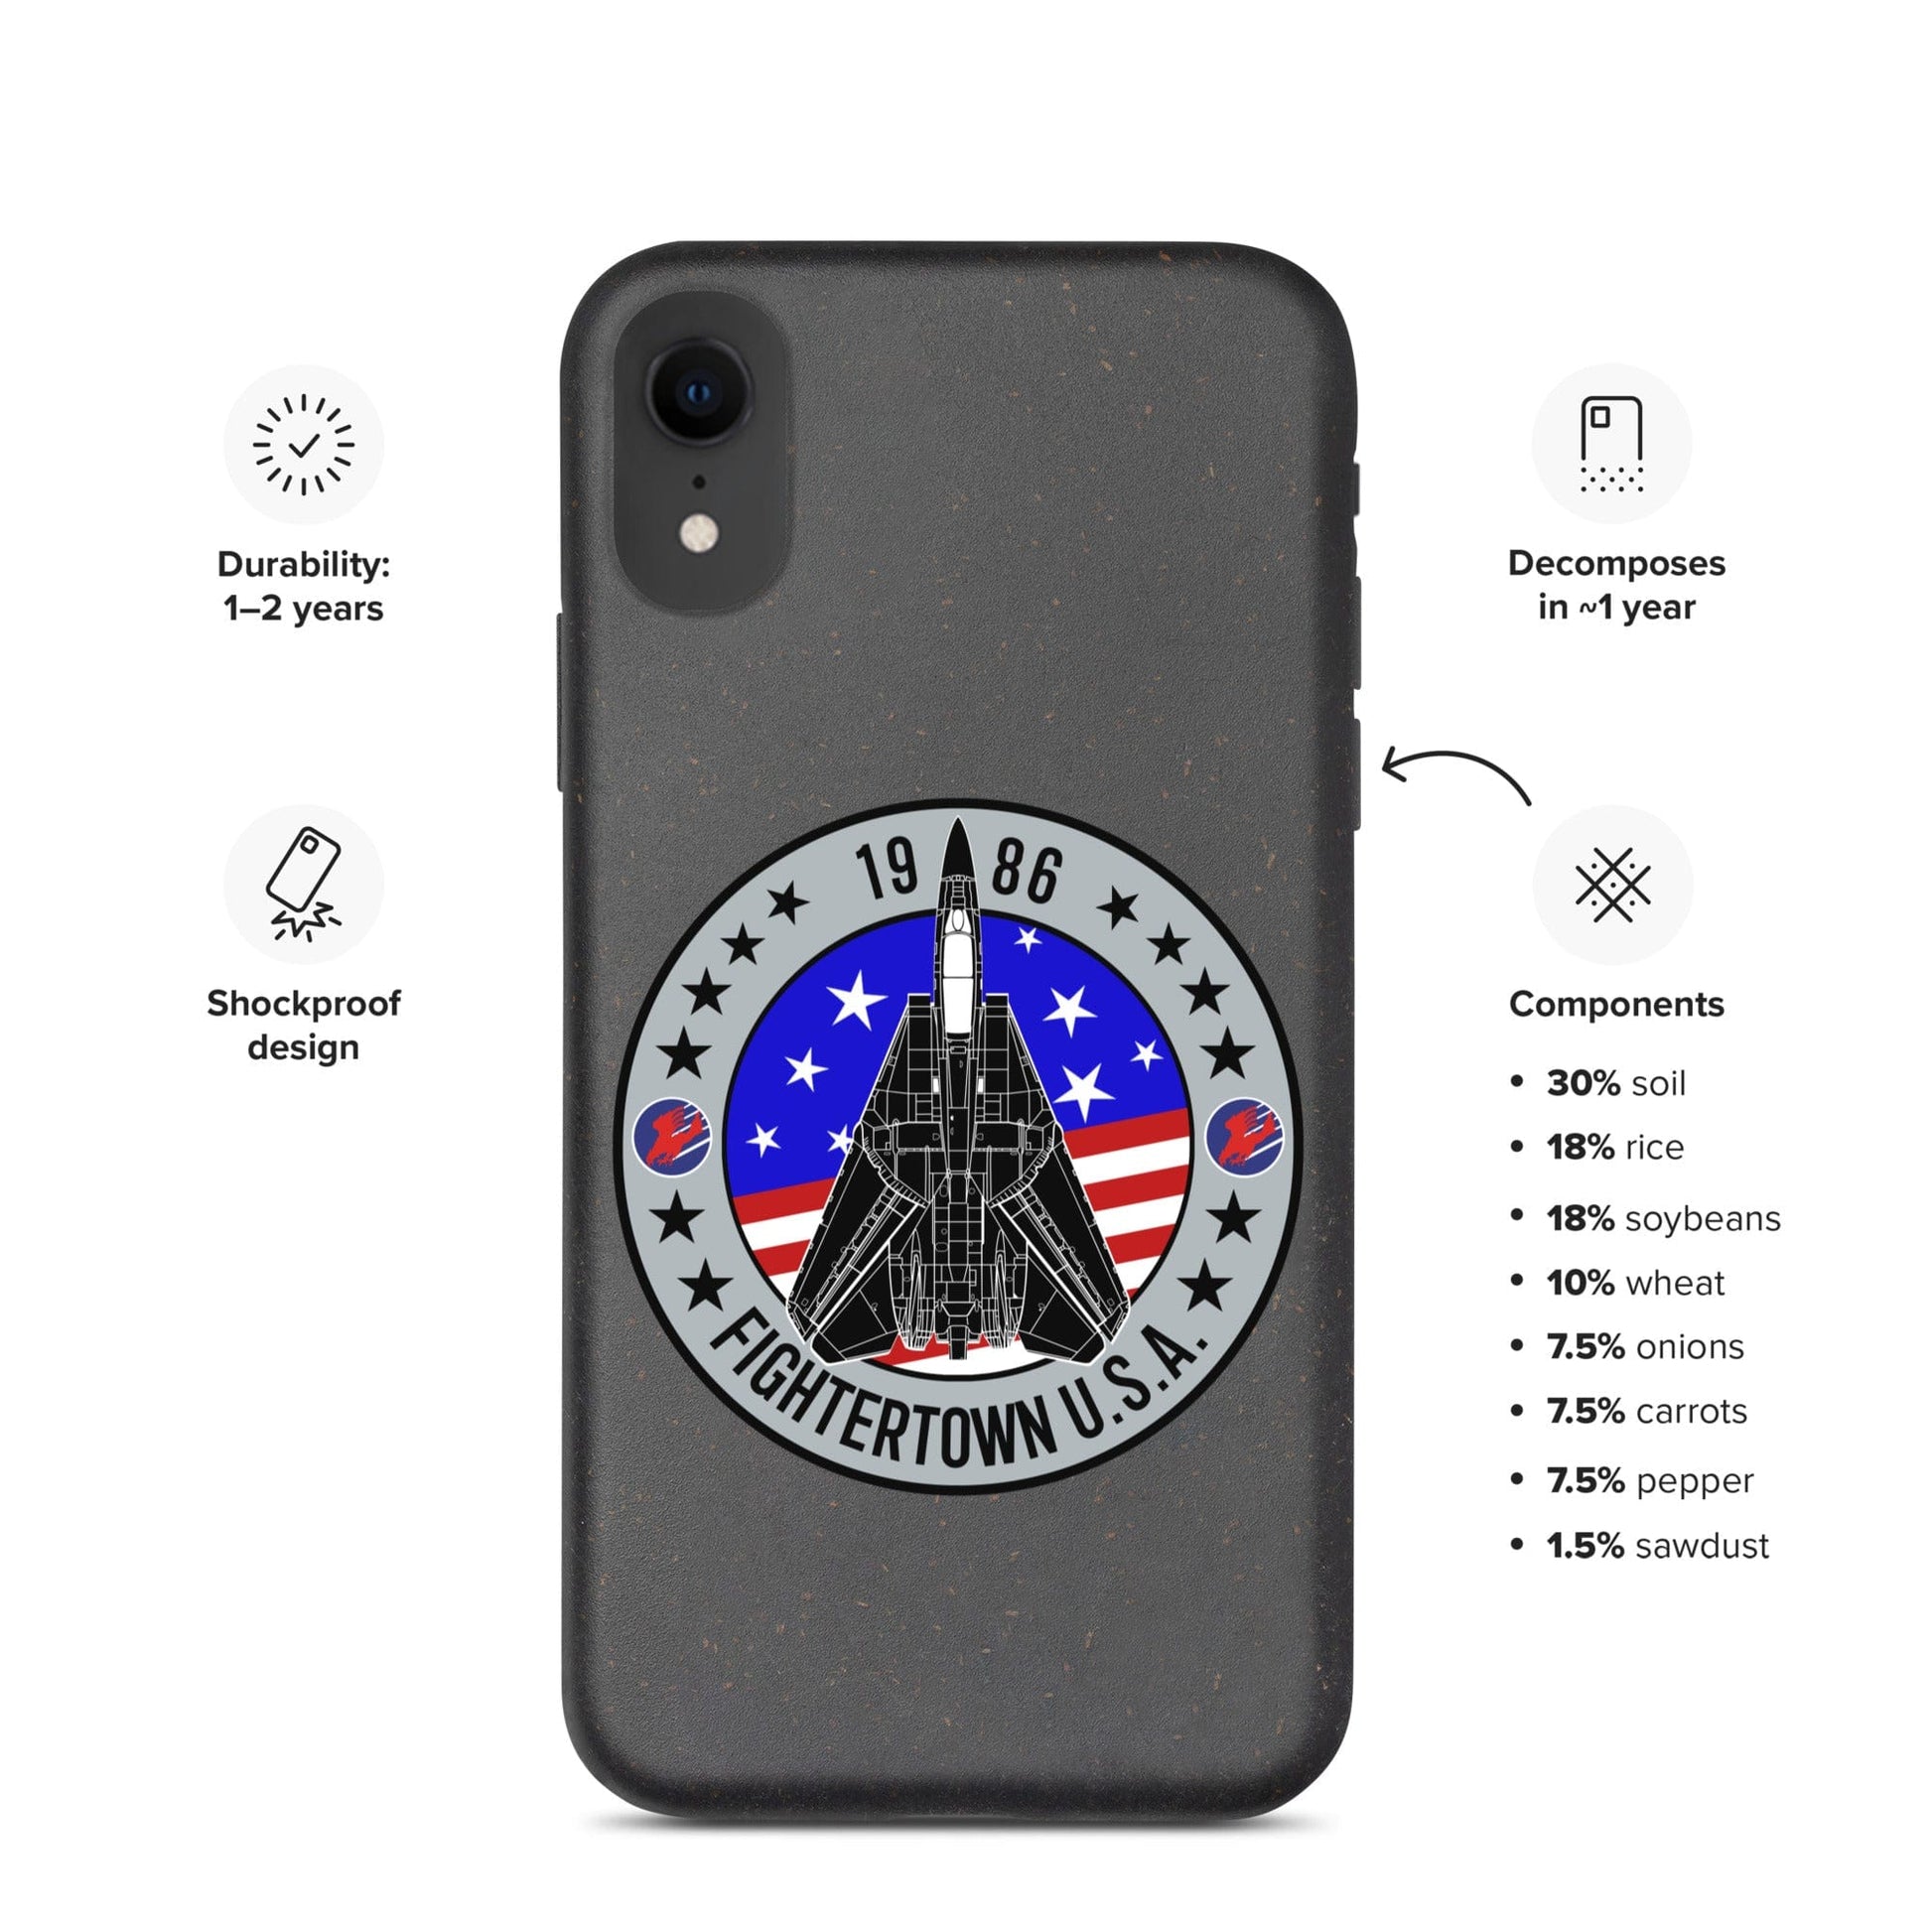 Top Gun Fans Mobile Phone Cases iPhone XR F-14 Tomcat Fightertown Organic iPhone Case